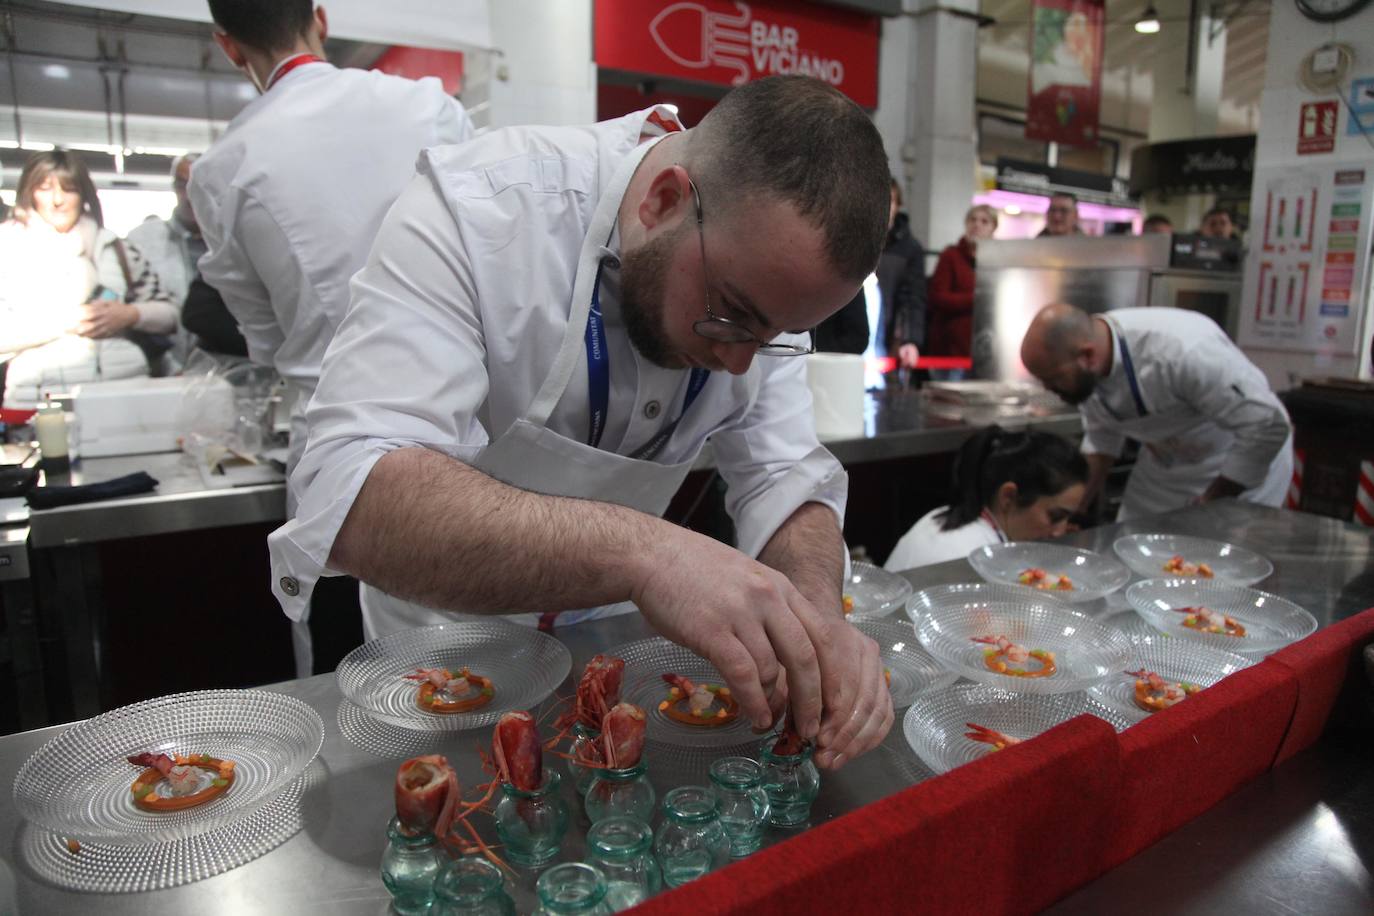 Pasión e innovación en el concurso de Cocina Creativa de la Gamba Roja de Dénia